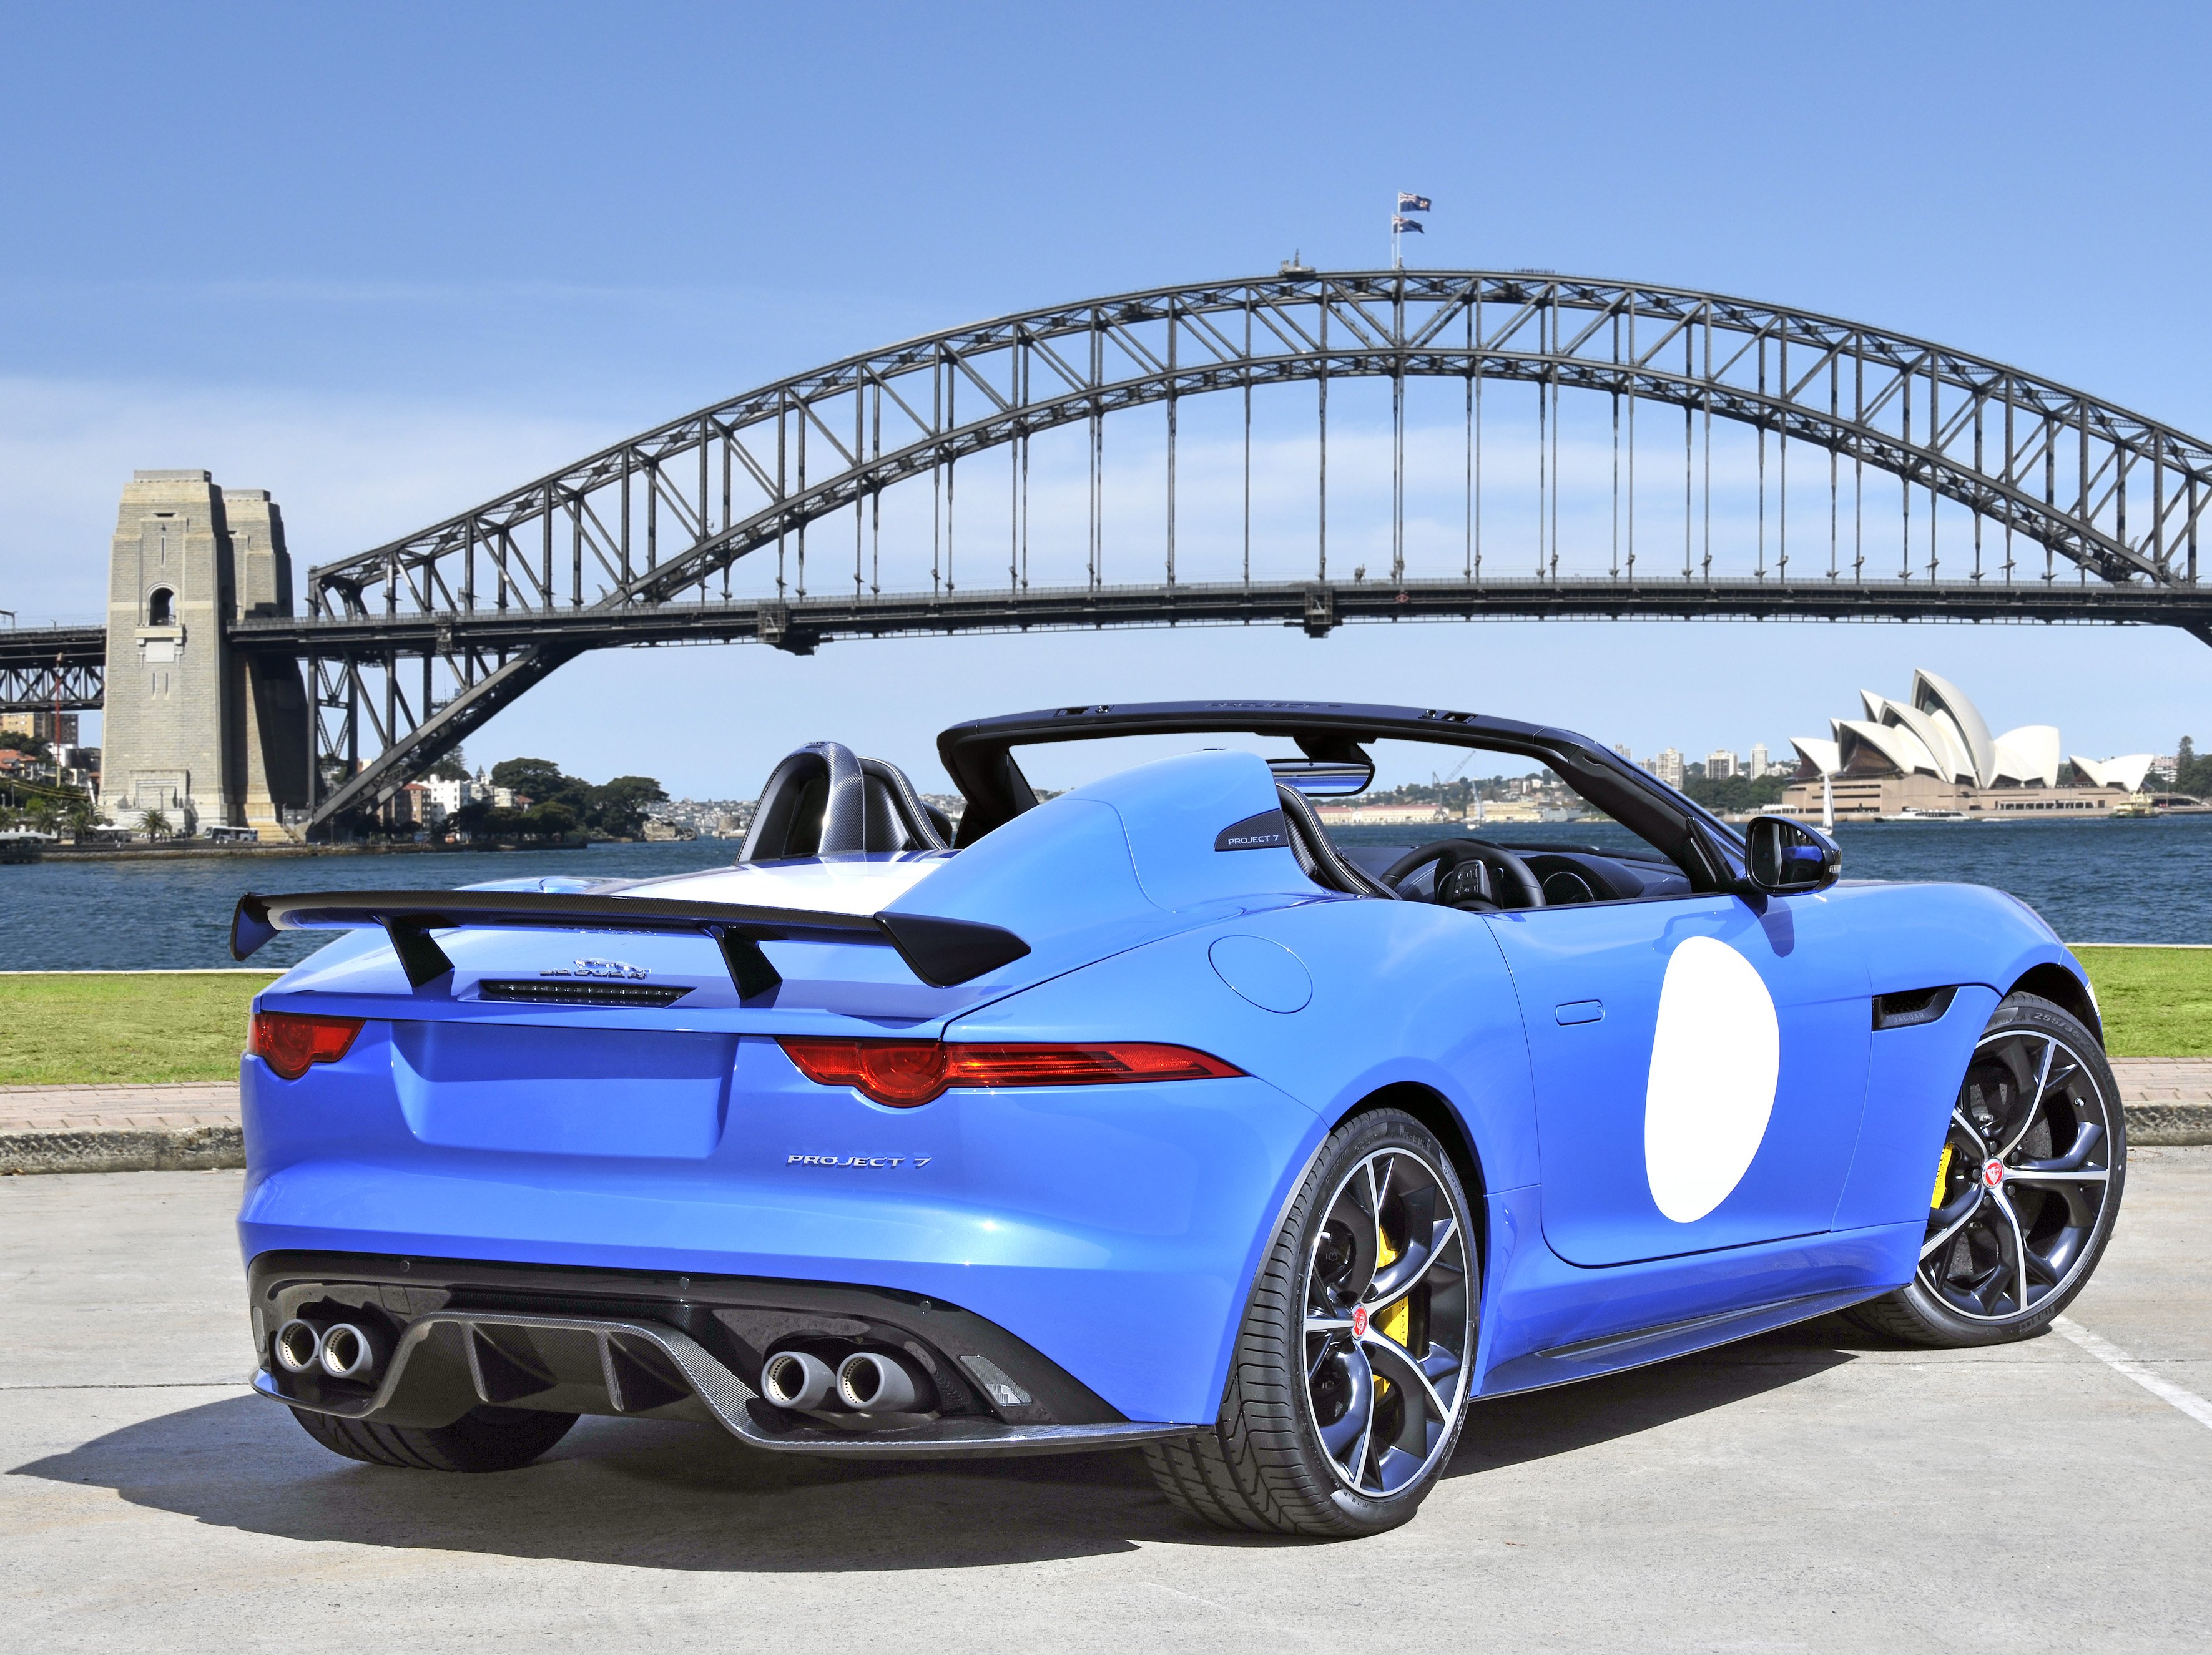 Jaguar F Type Jaguar Cars Sydney Harbour Bridge Sydney Australia Sydney Opera House 3543x2651